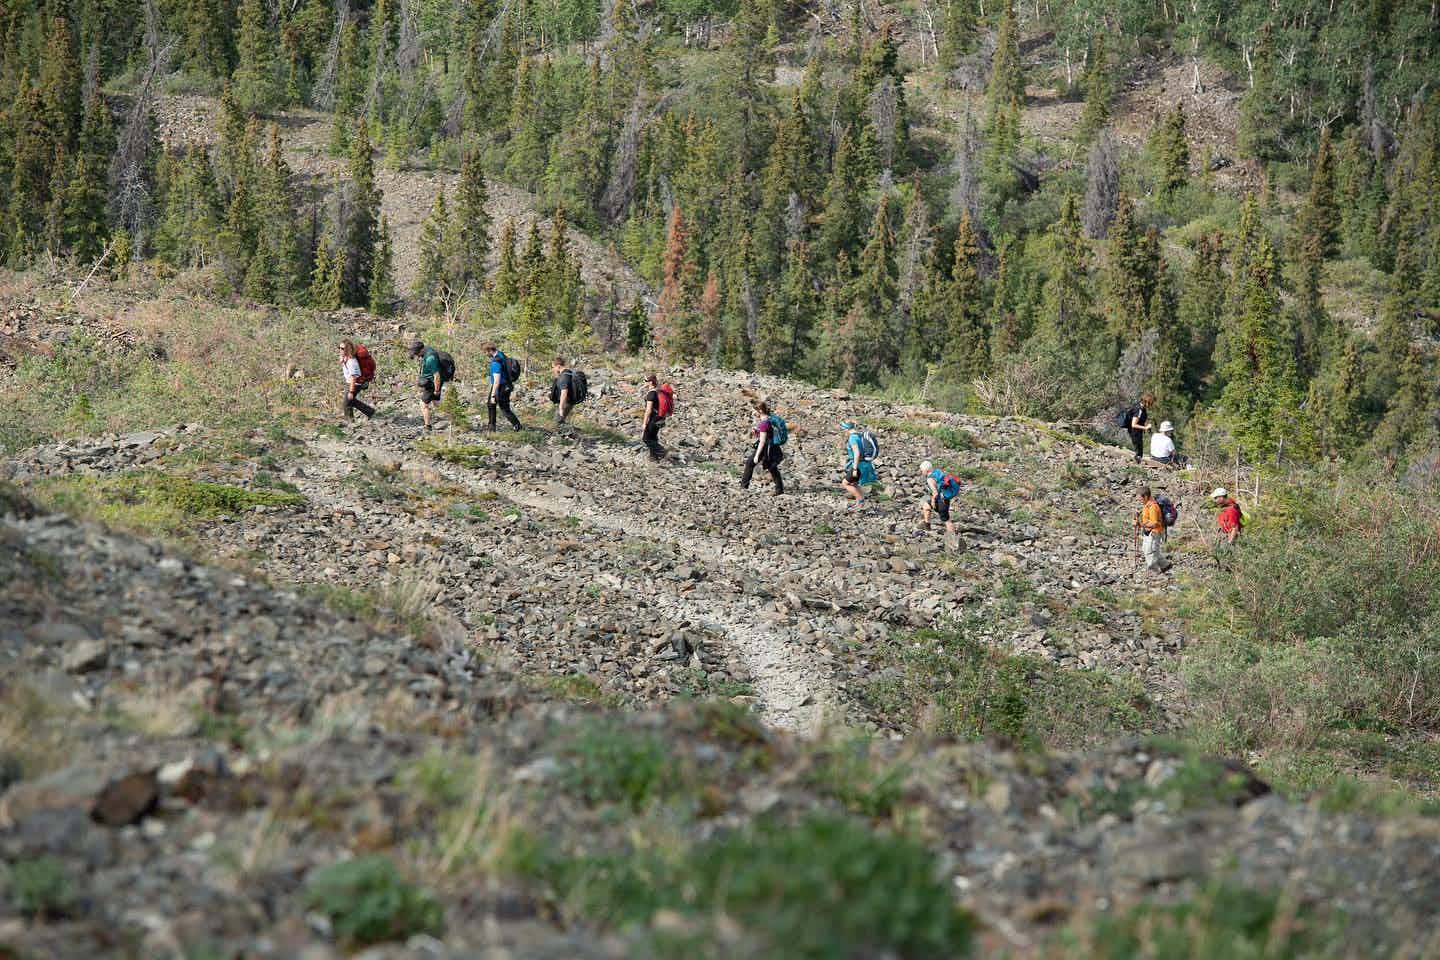 Yukon hiking, Canada
Host image: Ruby Range Adventures